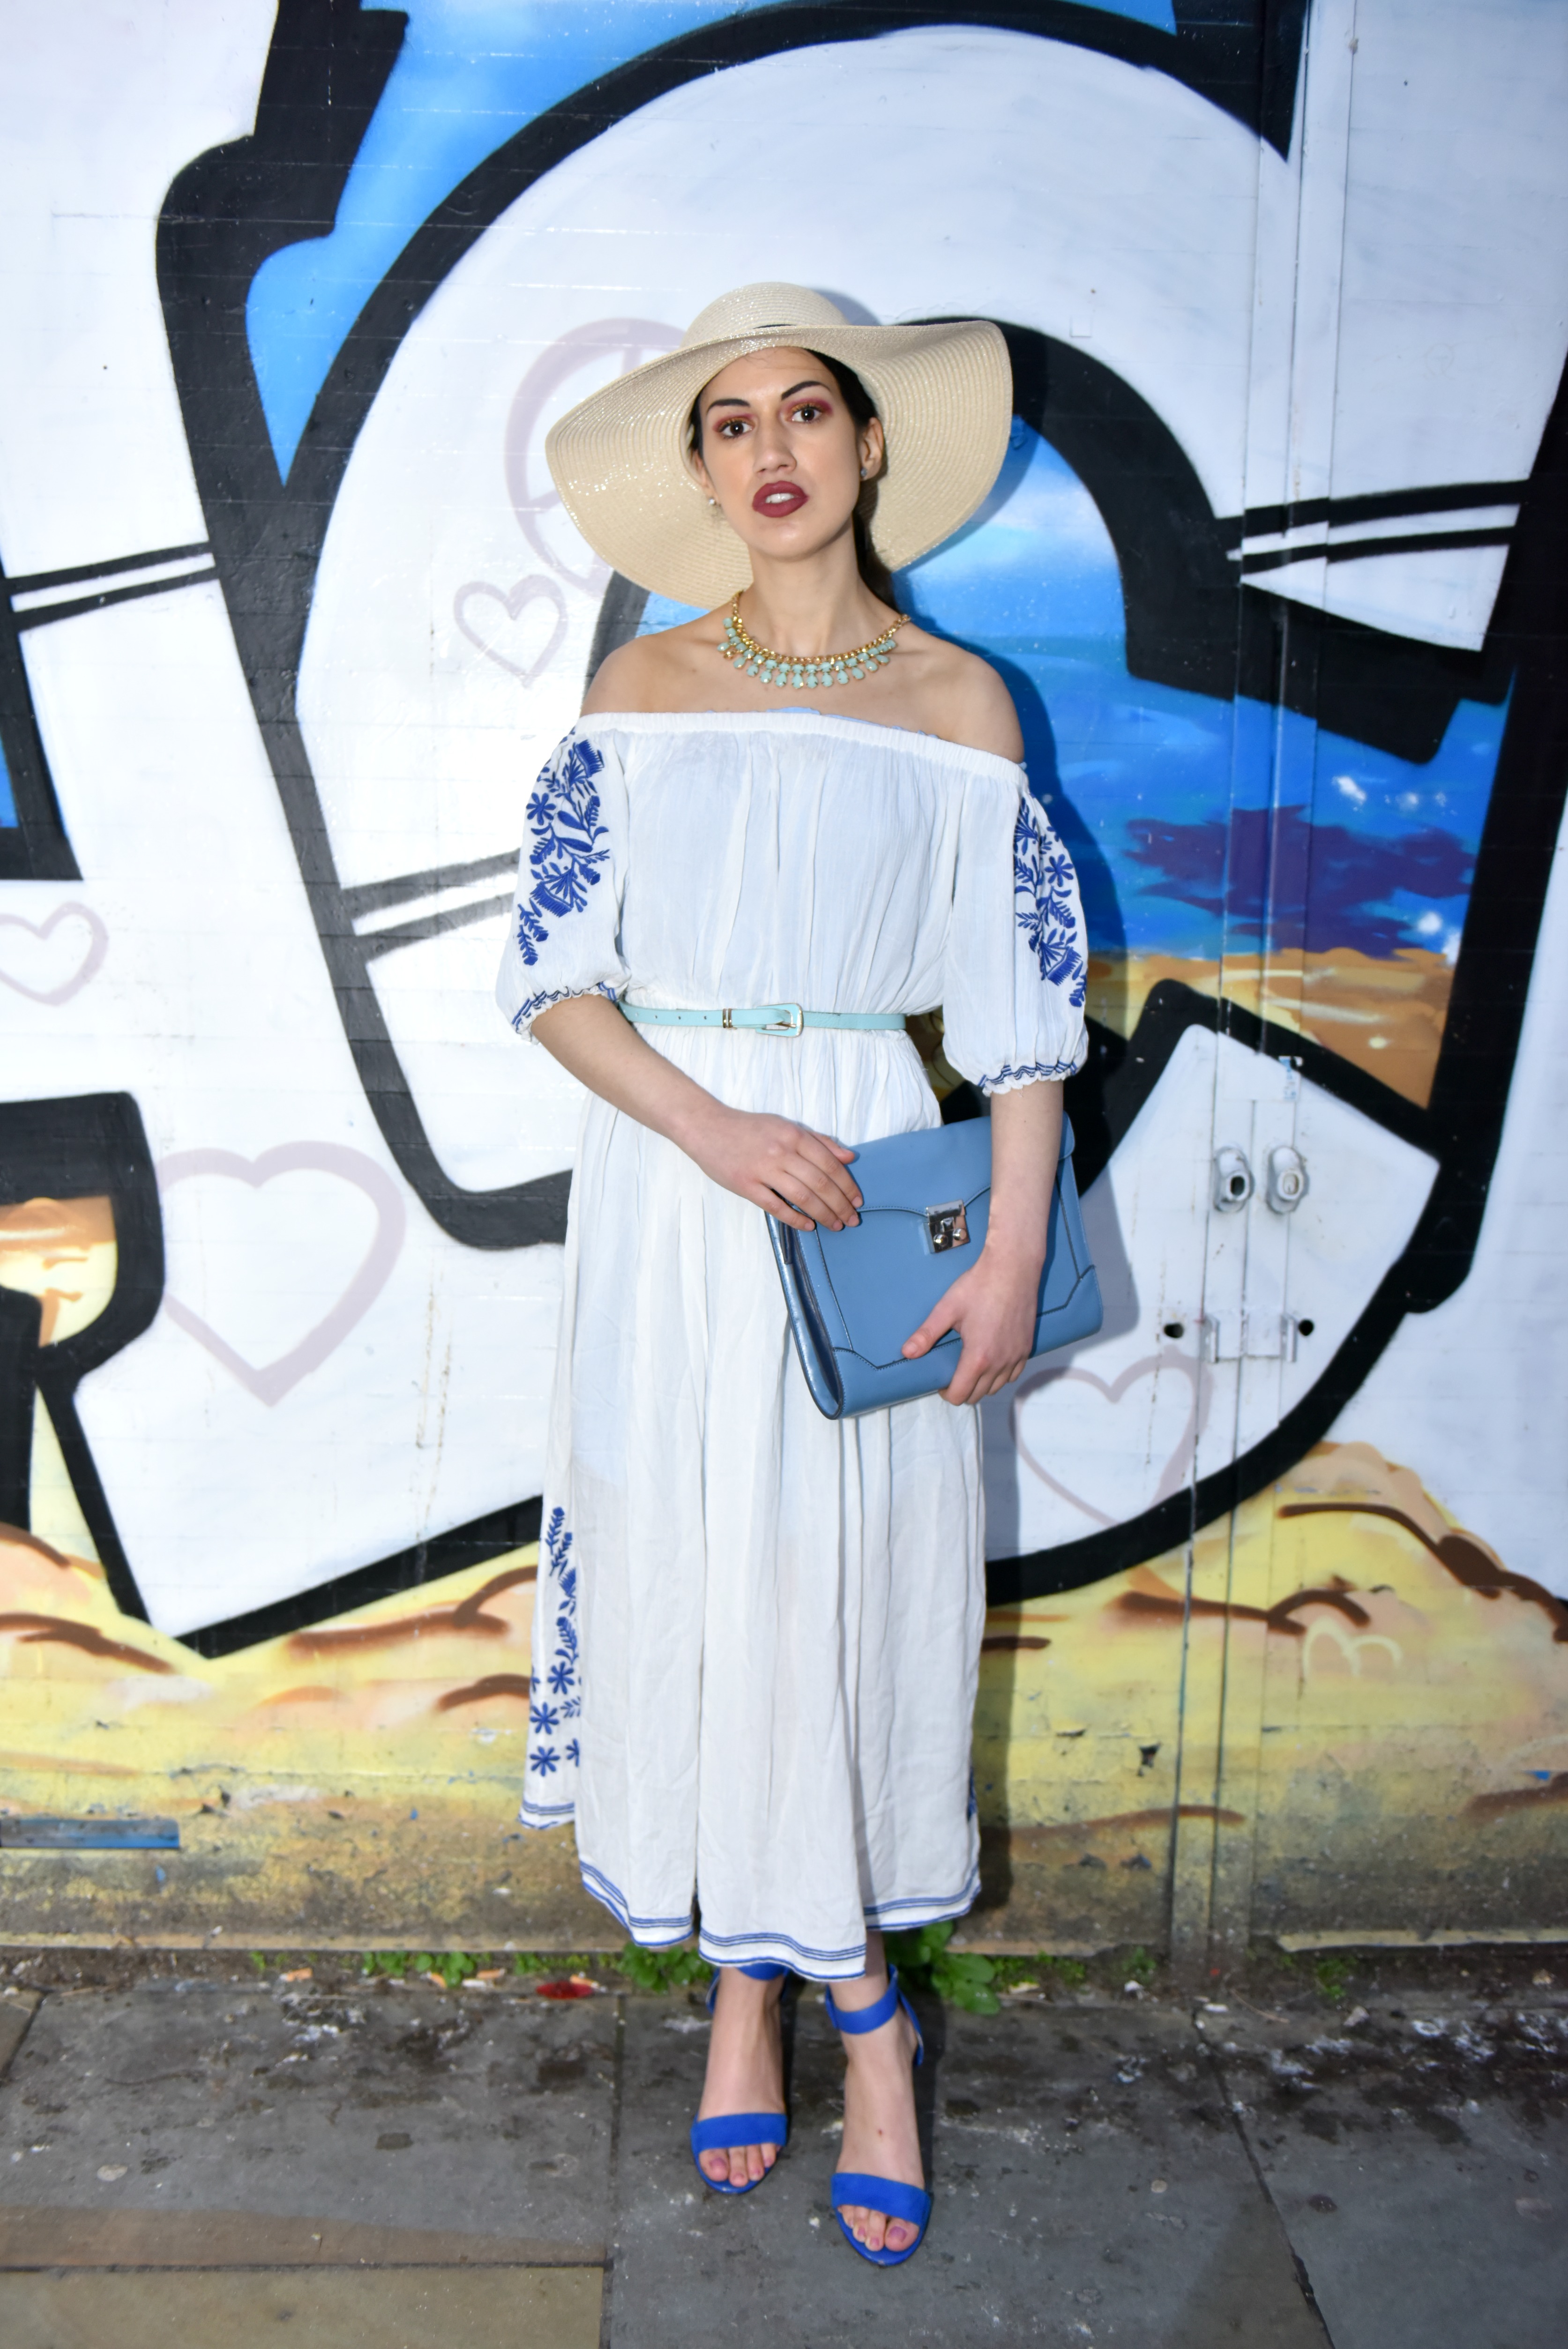 <img src="ana.jpg" alt="ana blue and white embroidered linen dress"> 